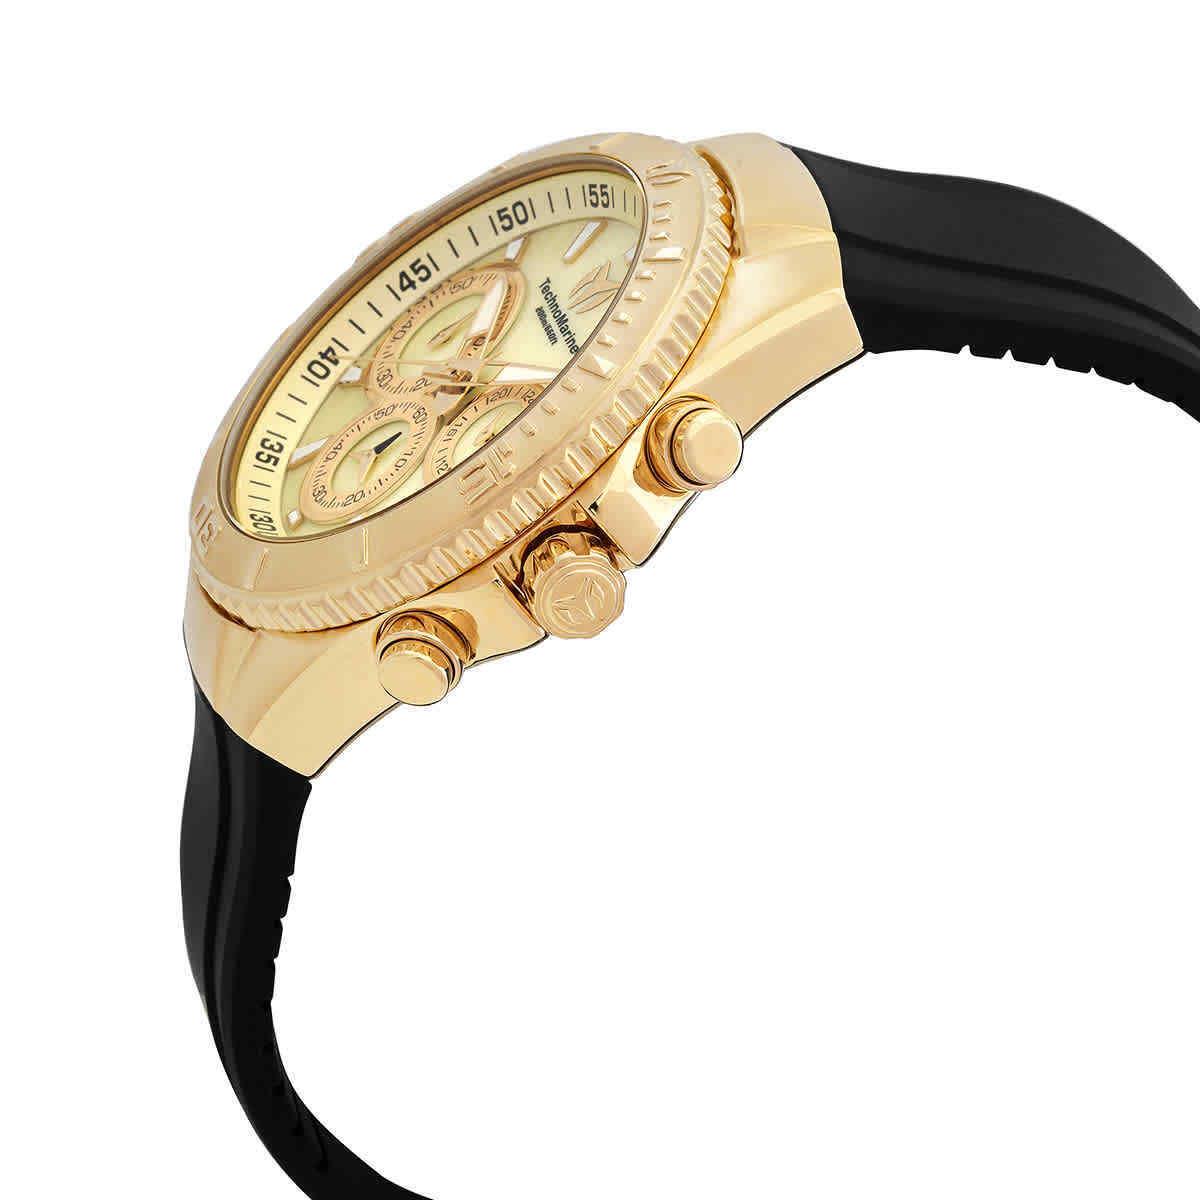 Technomarine Sea Manta Chronograph Gmt Quartz Unisex Watch TM-220072 - Dial: Mother of Pearl, Band: Black, Bezel: Gold-tone